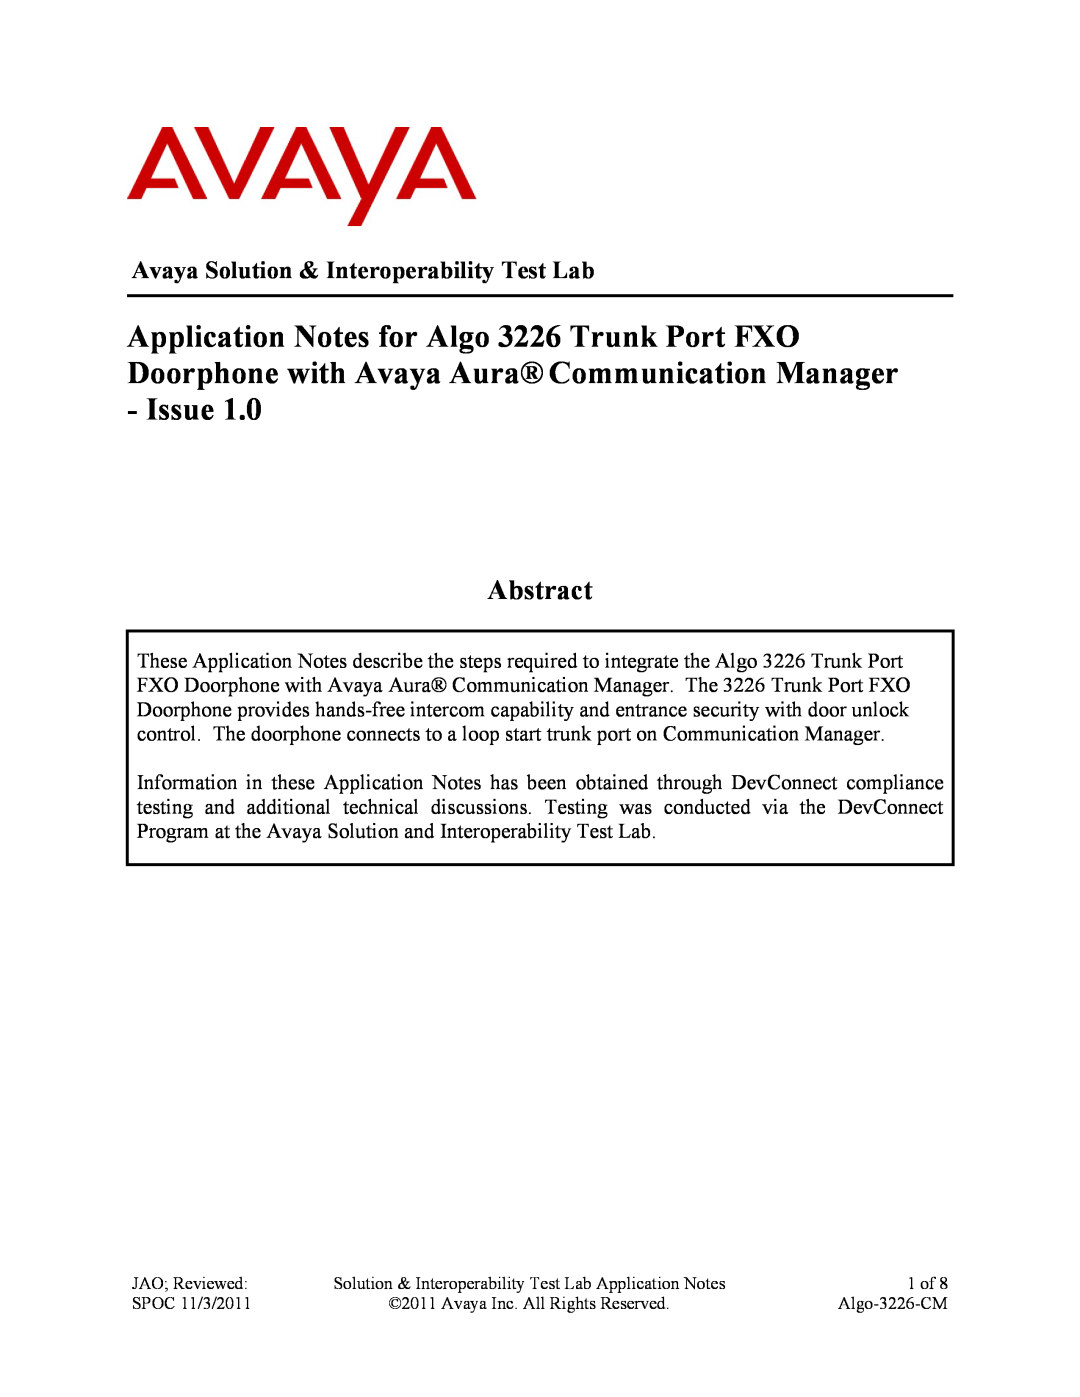 Avaya ALGO-3226-CM manual Abstract, Avaya Solution & Interoperability Test Lab 